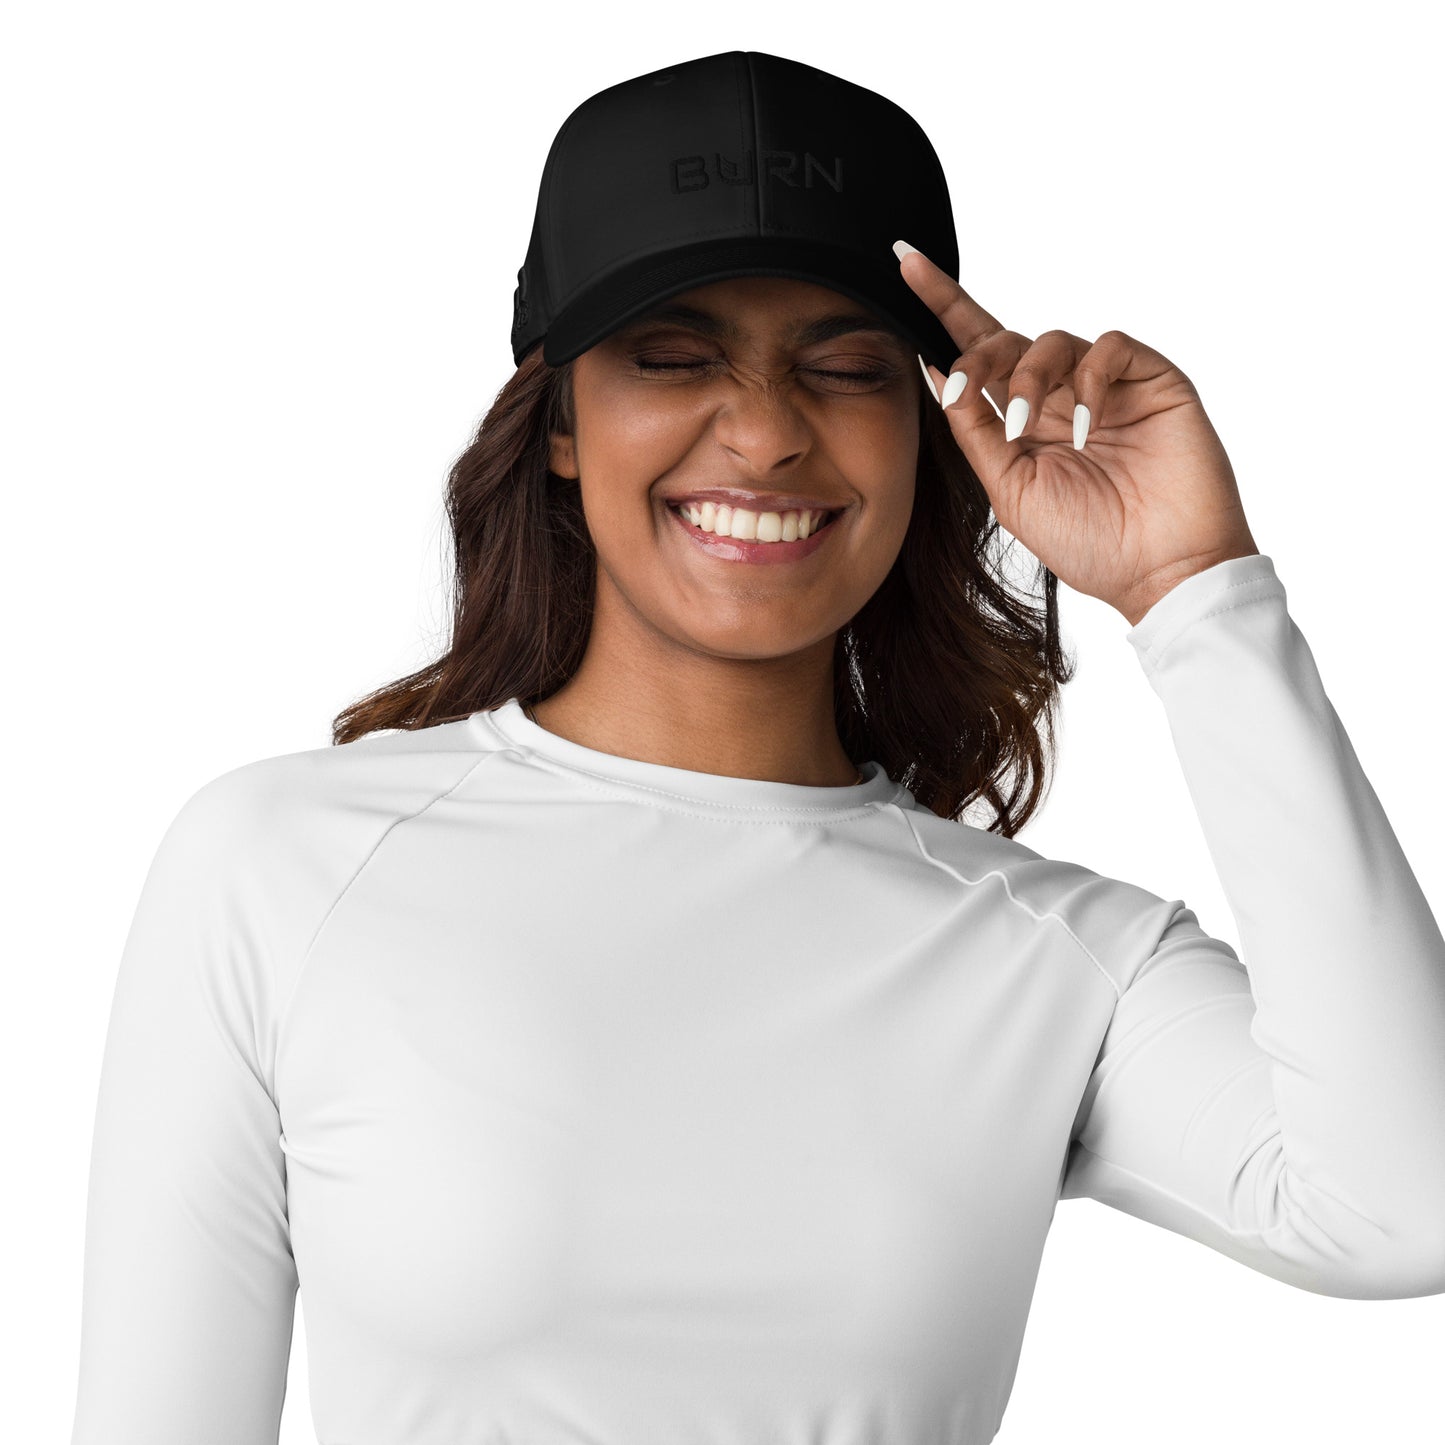 Adidas dad hat, embroidered logo - BURN Athletic